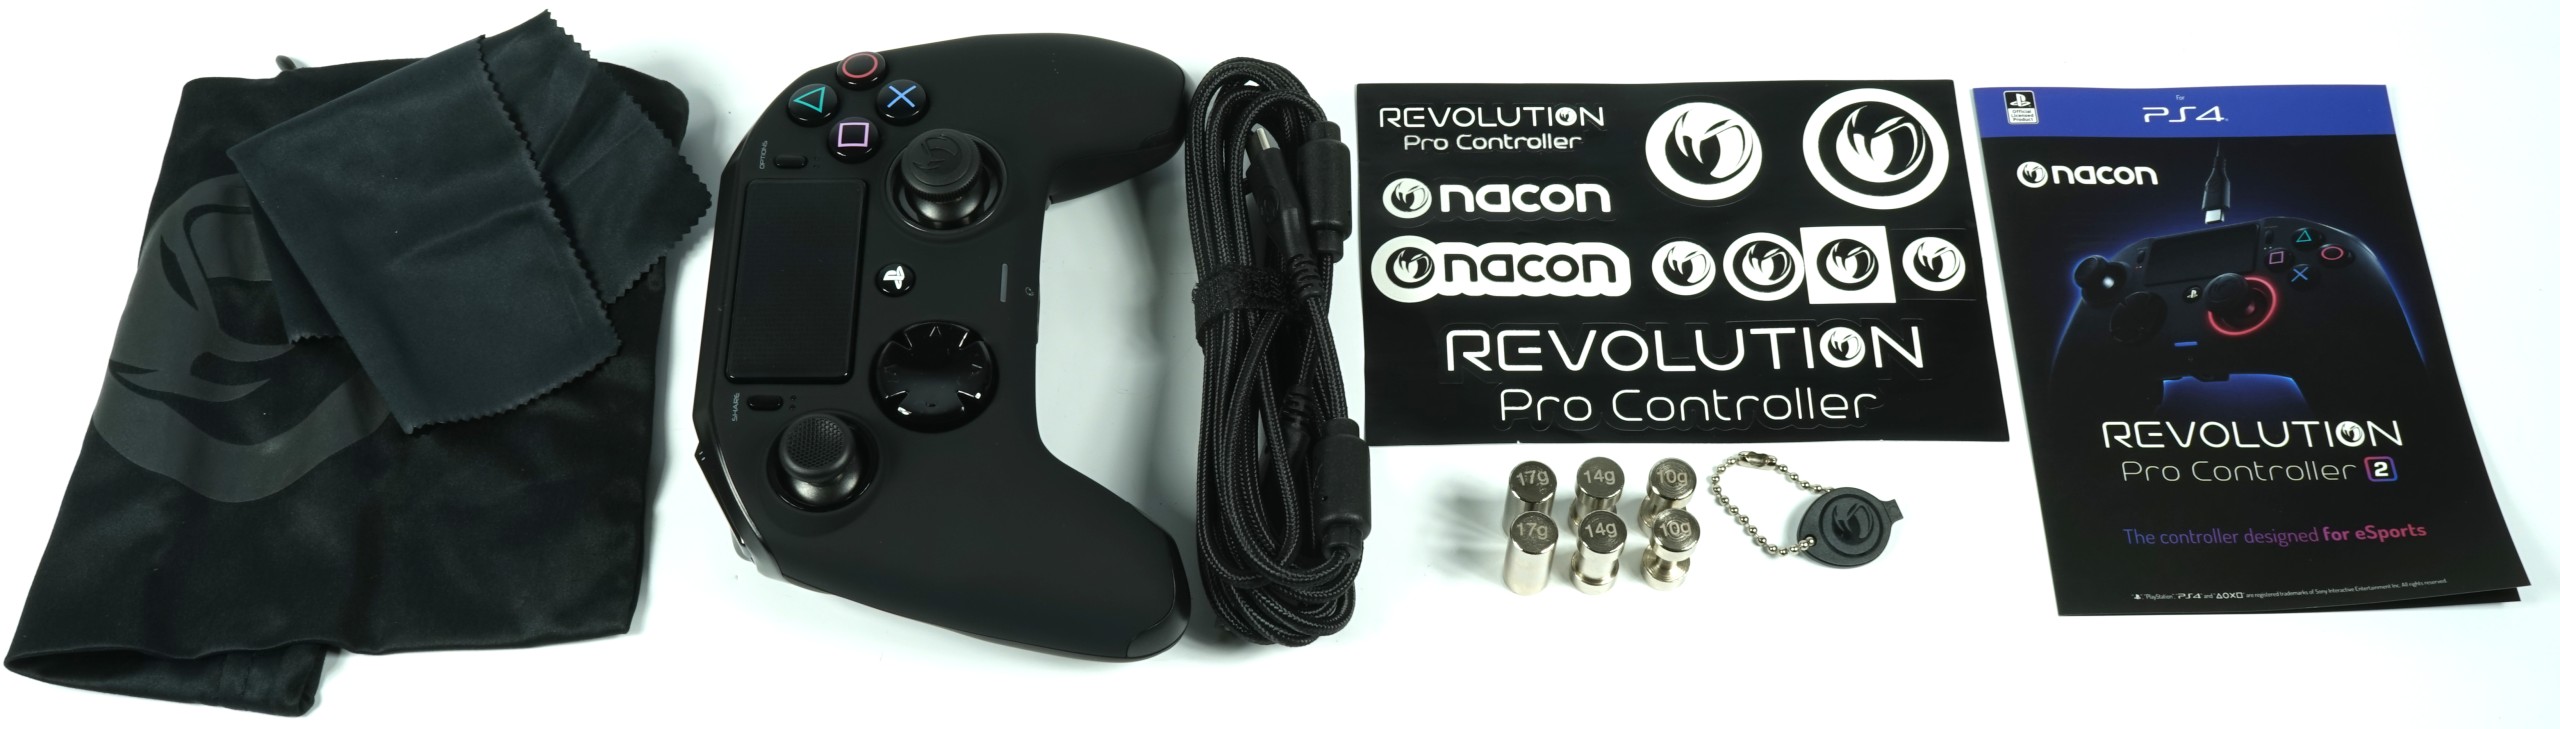 nacon revolution pro 2 price